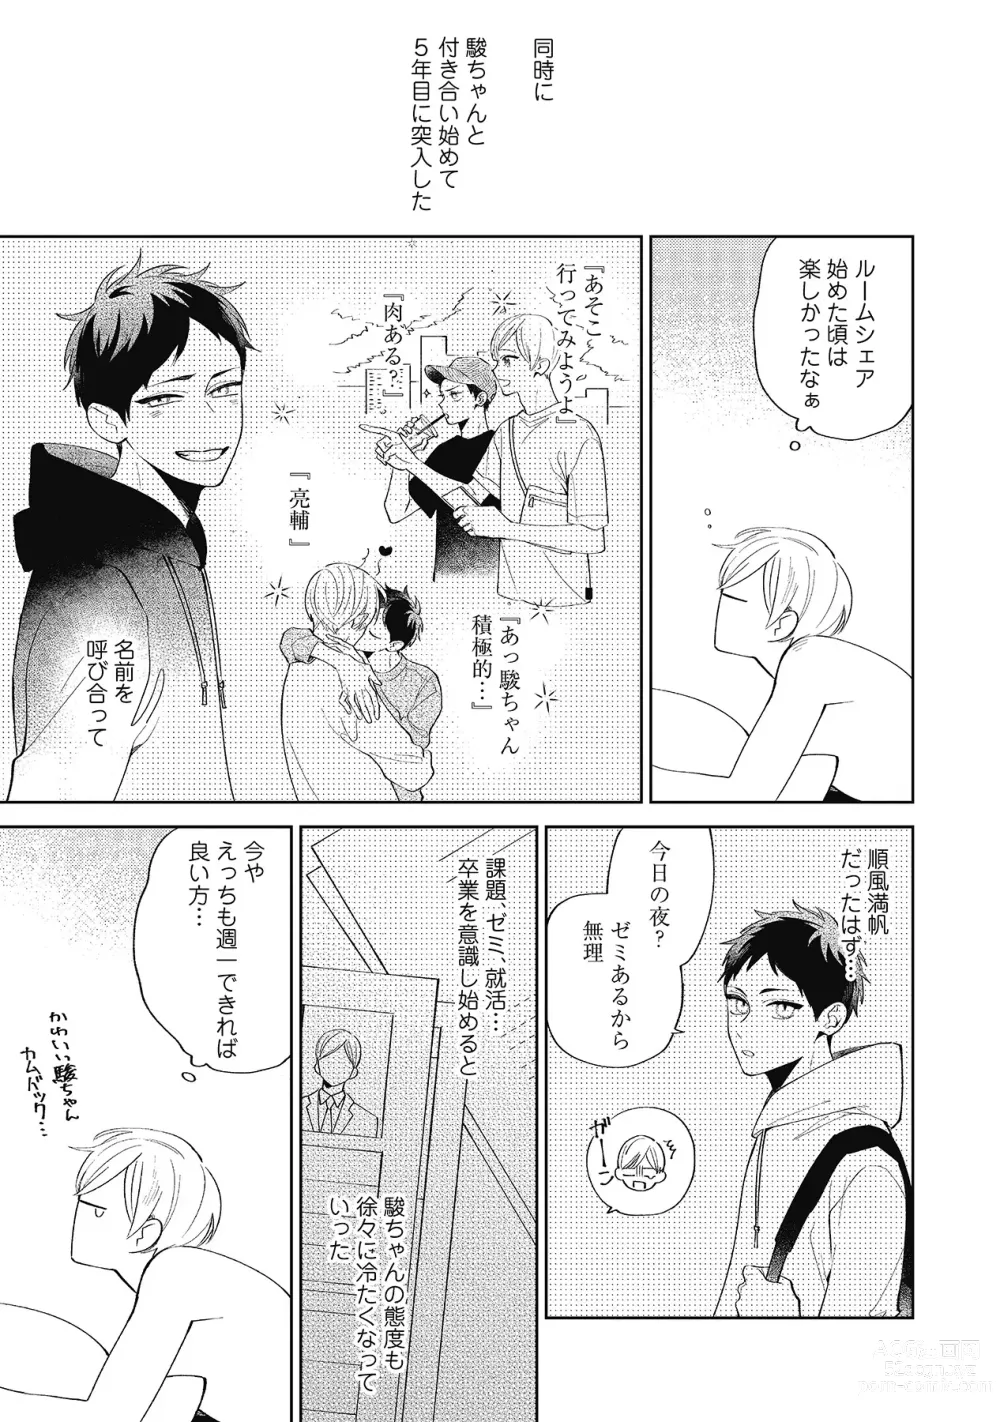 Page 11 of manga Sentimental Darling